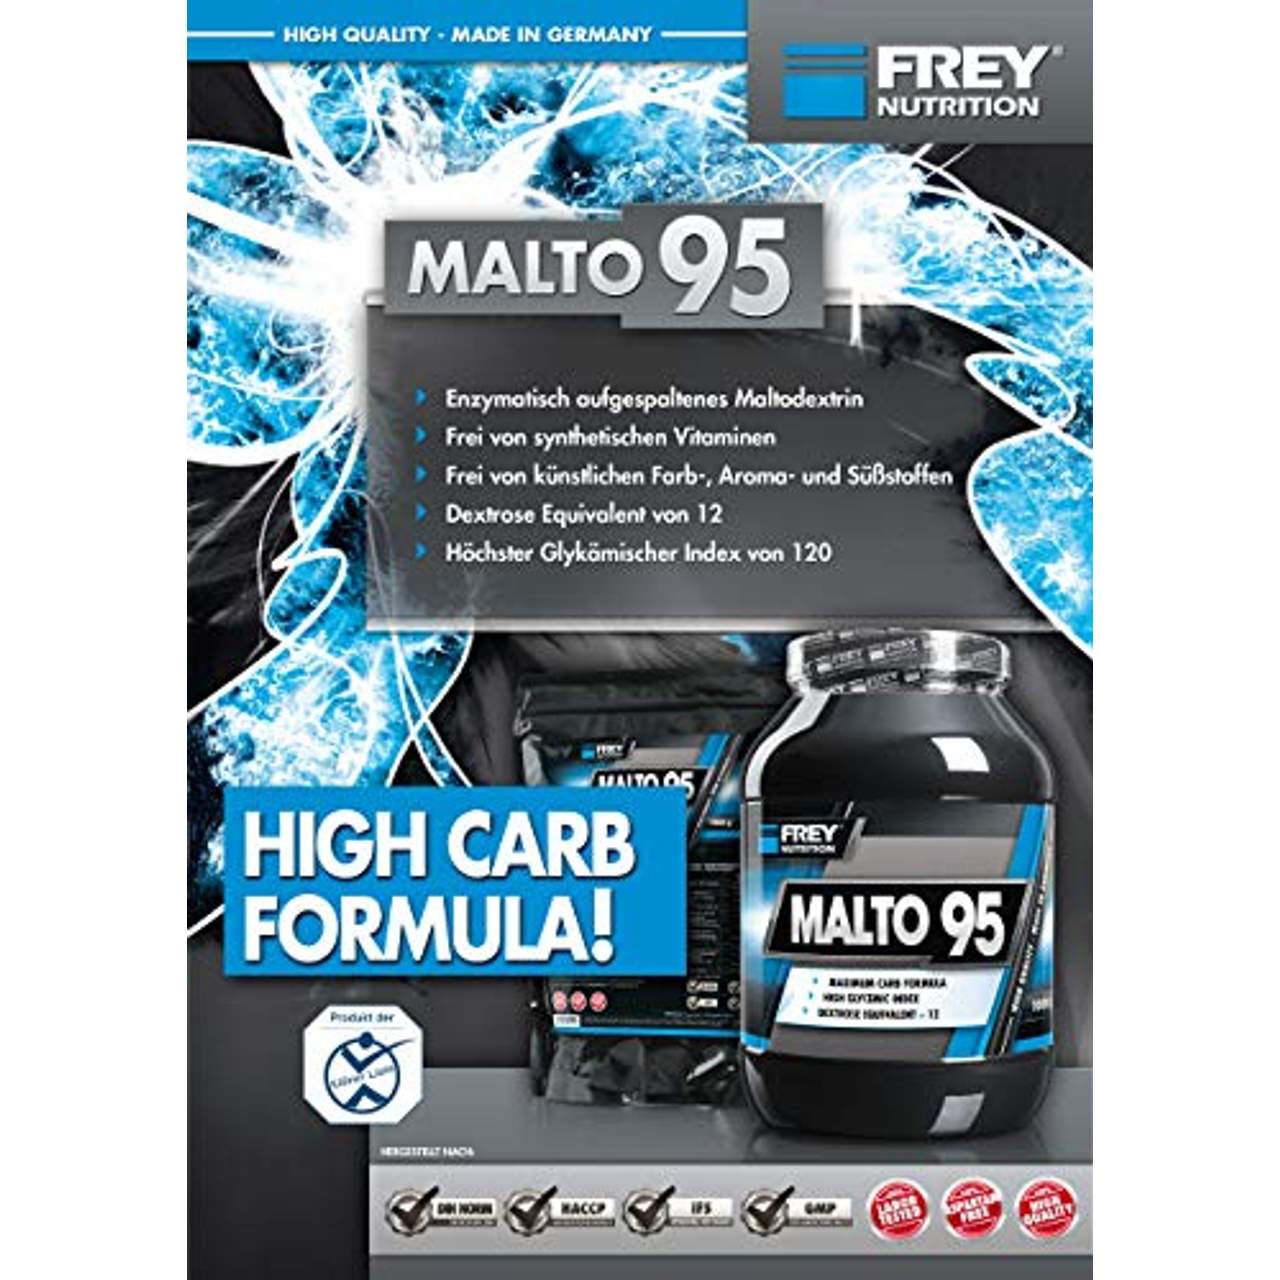 Frey Nutrition Malto 95 3 x 1000g Beutel 3er Pack